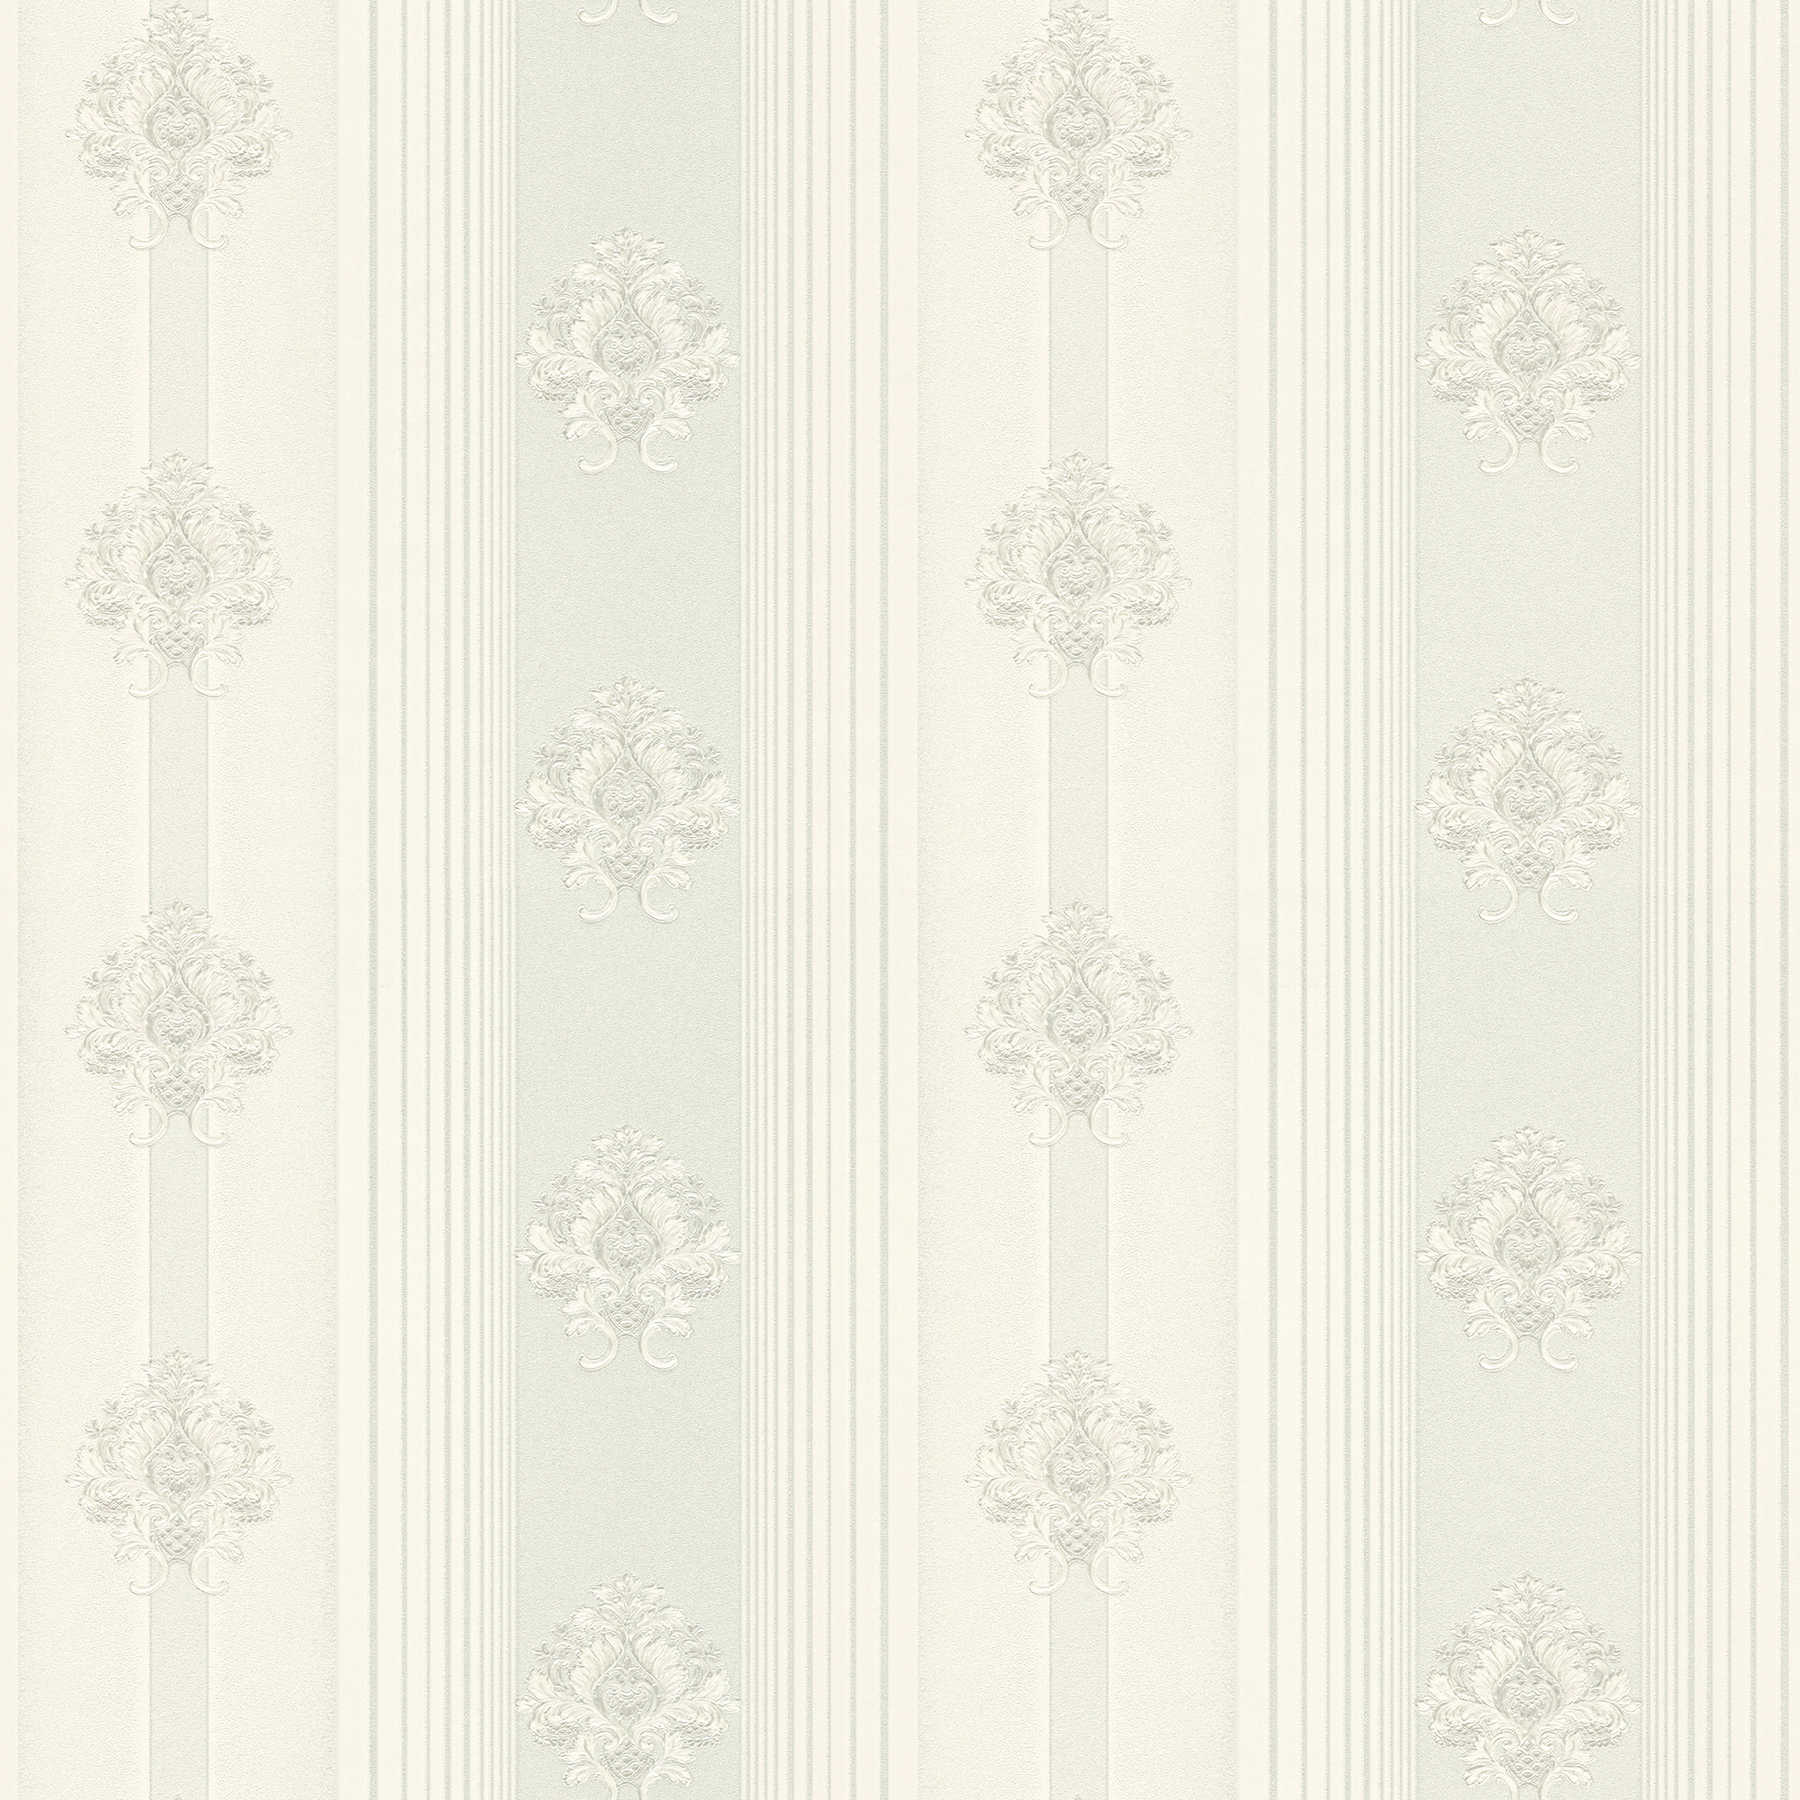 Non-woven wallpaper stripes & ornaments with metallic accent - silver, white
